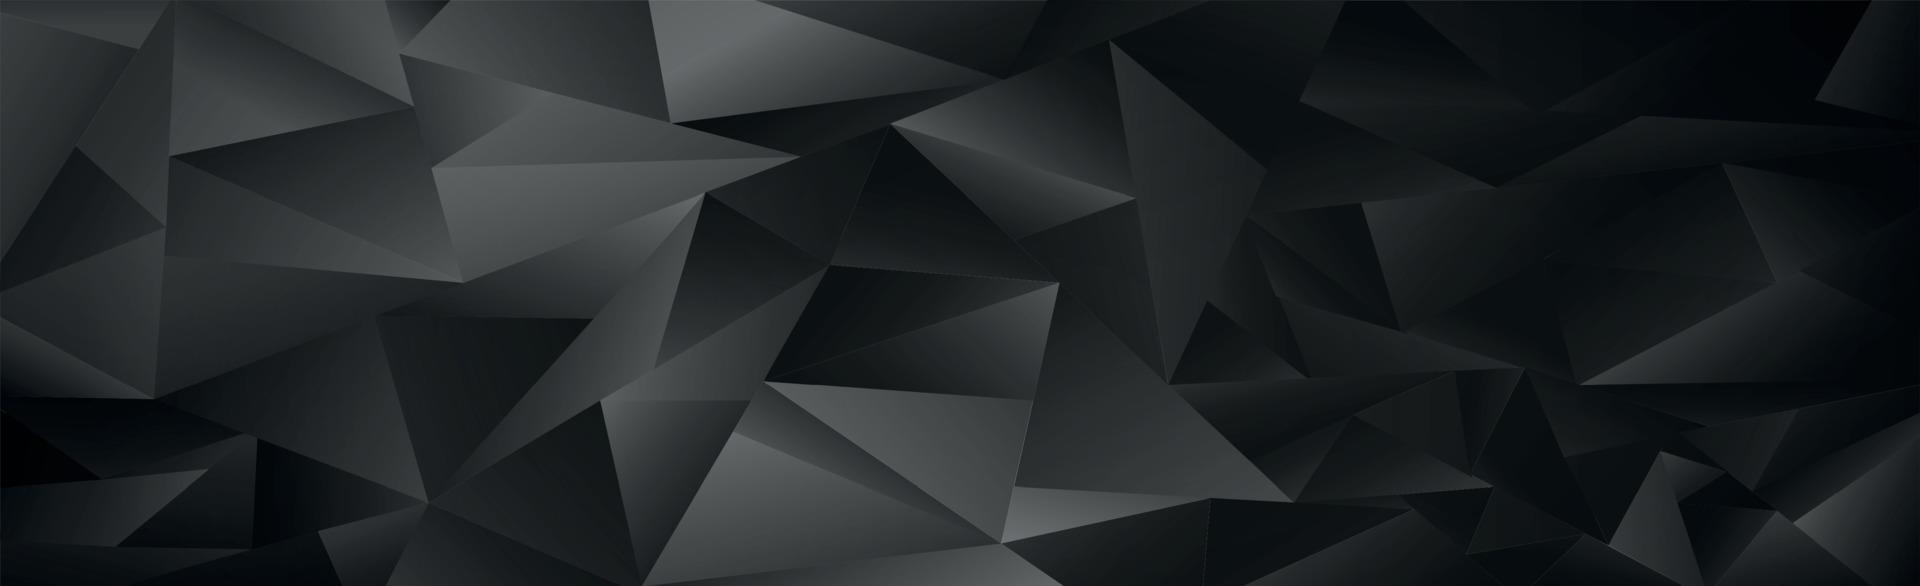 triângulos gradientes abstratos de preto e cinza de diferentes tamanhos - vetor